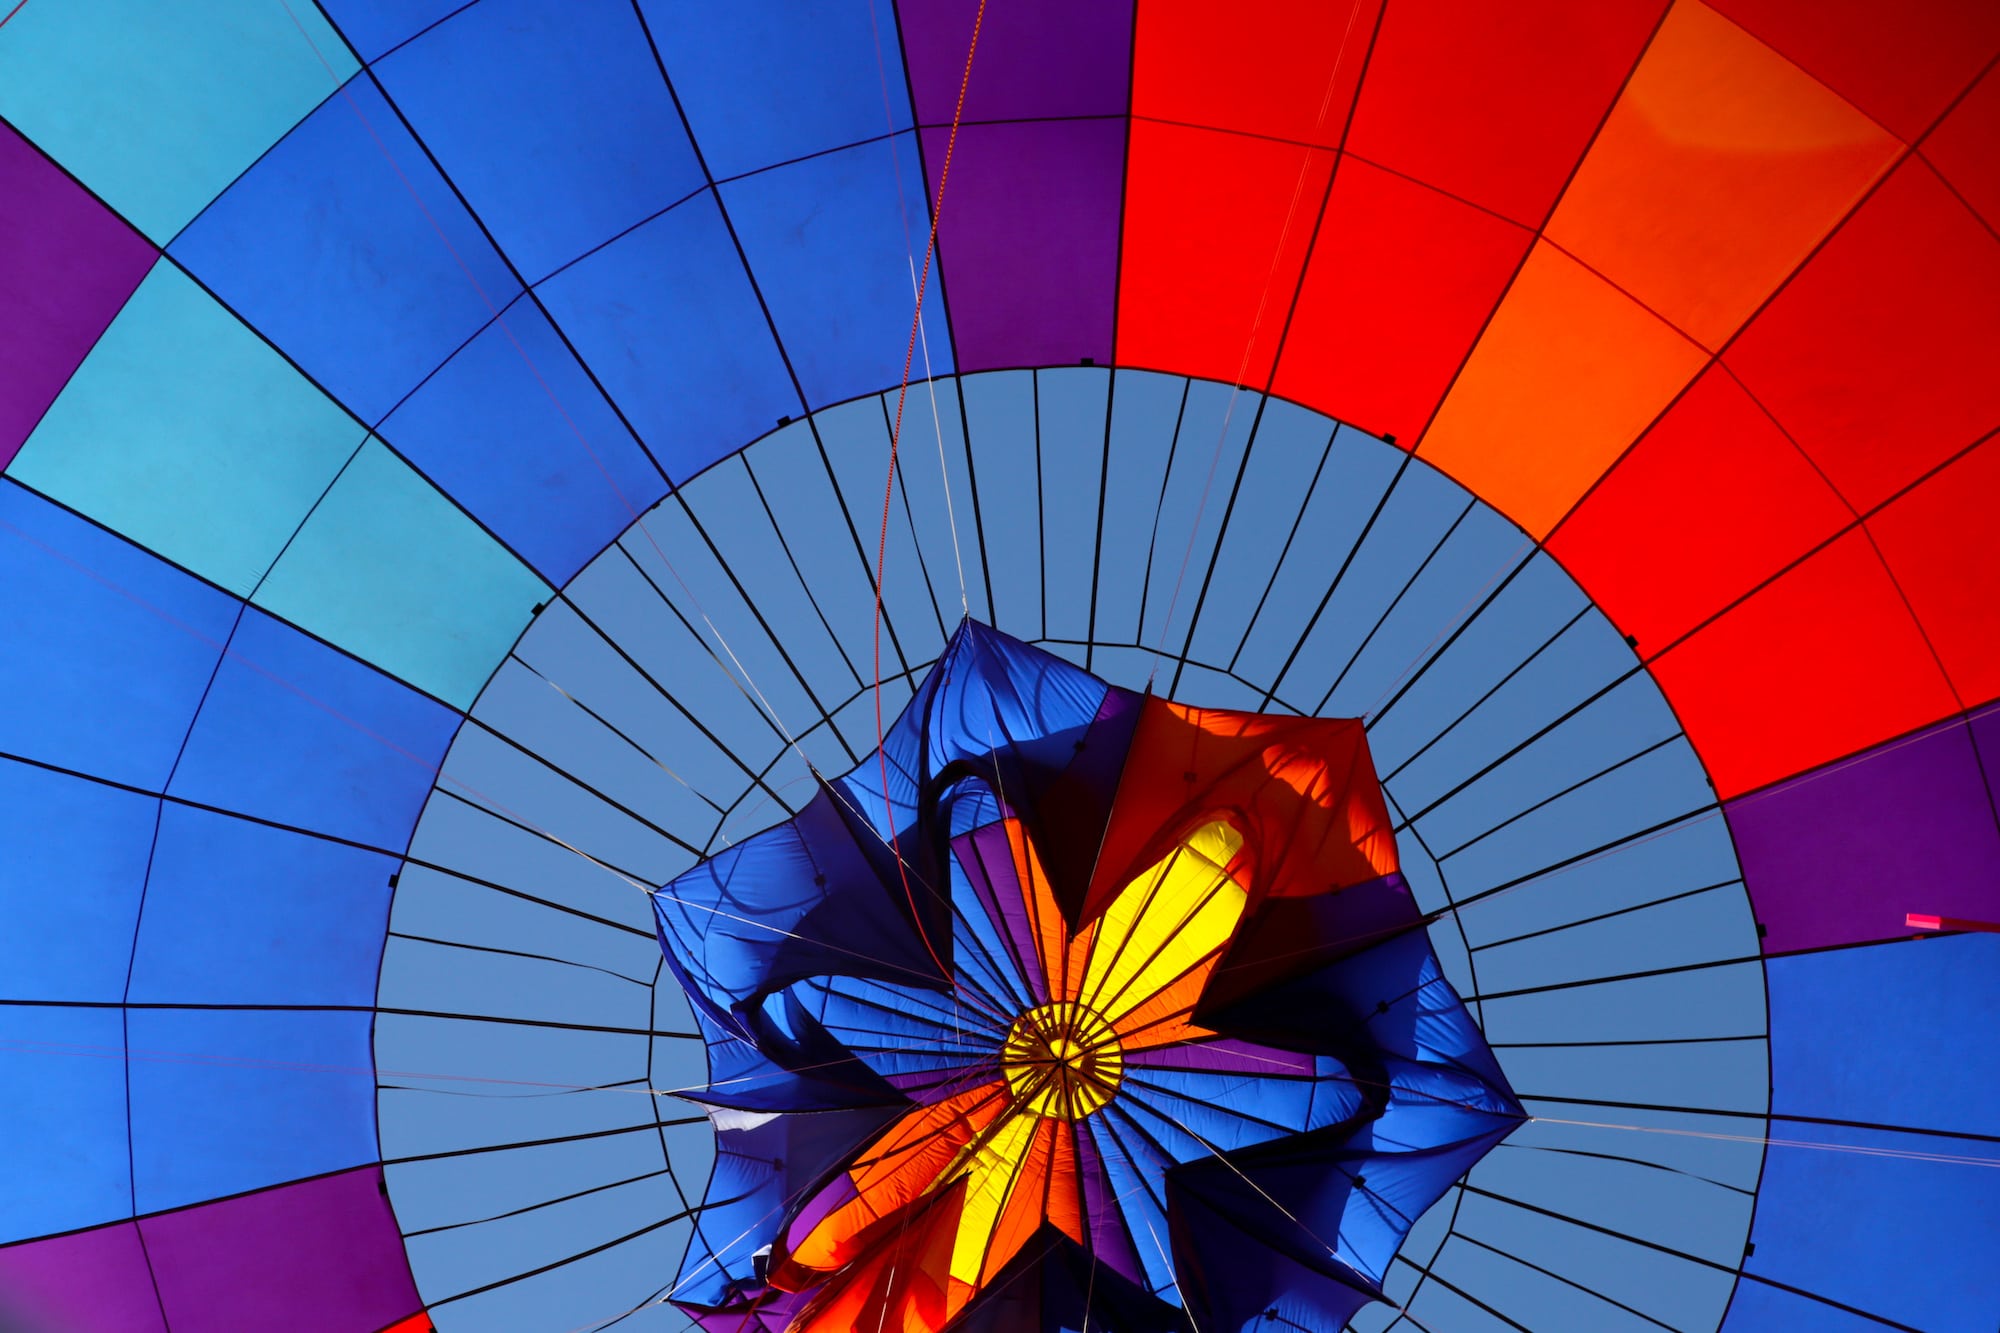 Inside the balloon of a hot air balloon